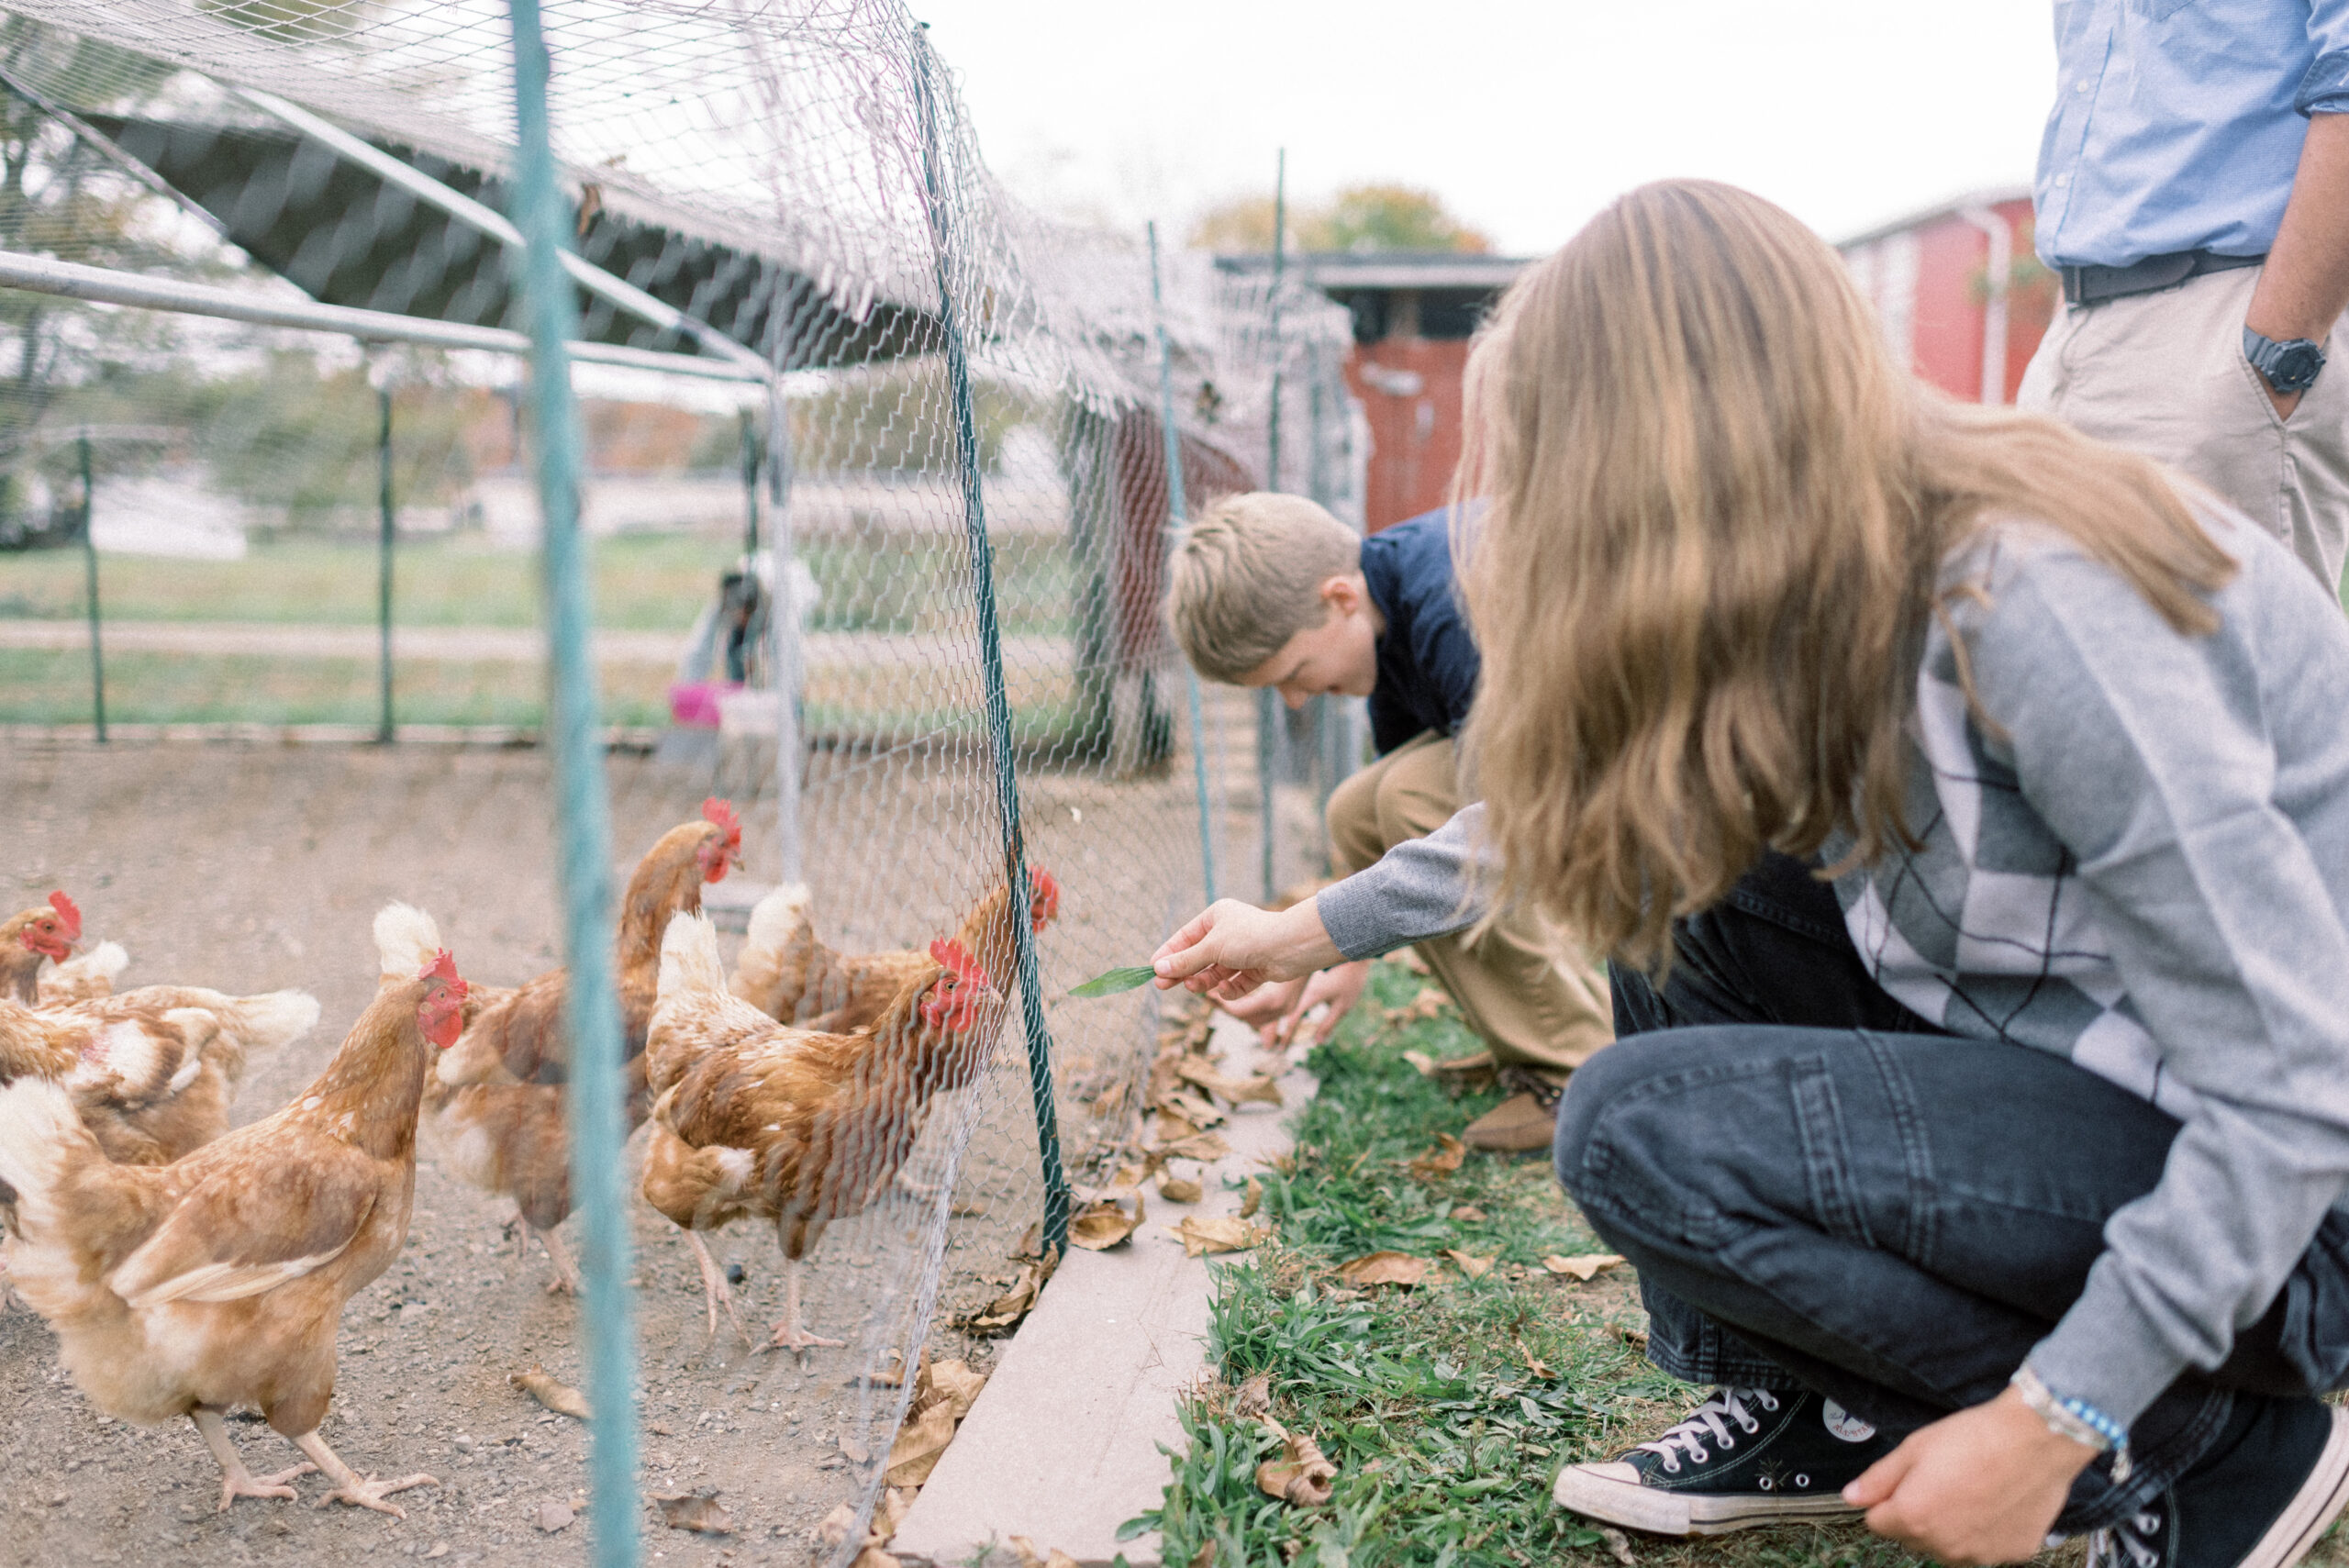 Pennsylvania photographer captures children feeding chickens